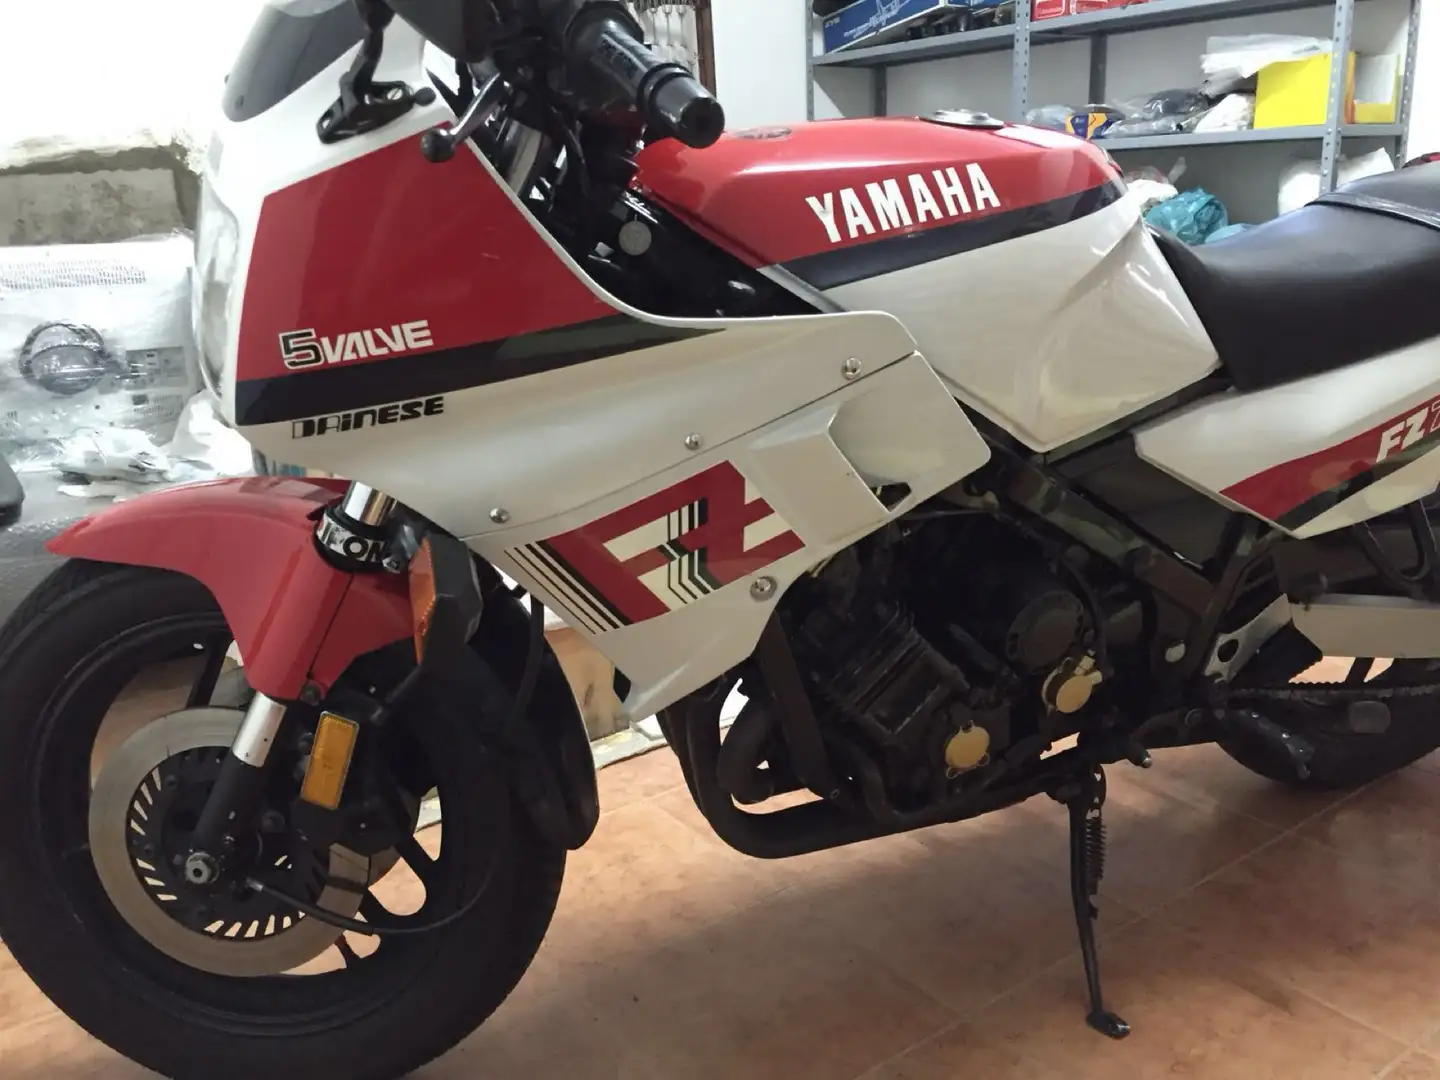 Yamaha FZ 750 immatricolazione canada colorazione bianca rossa Beyaz - 1